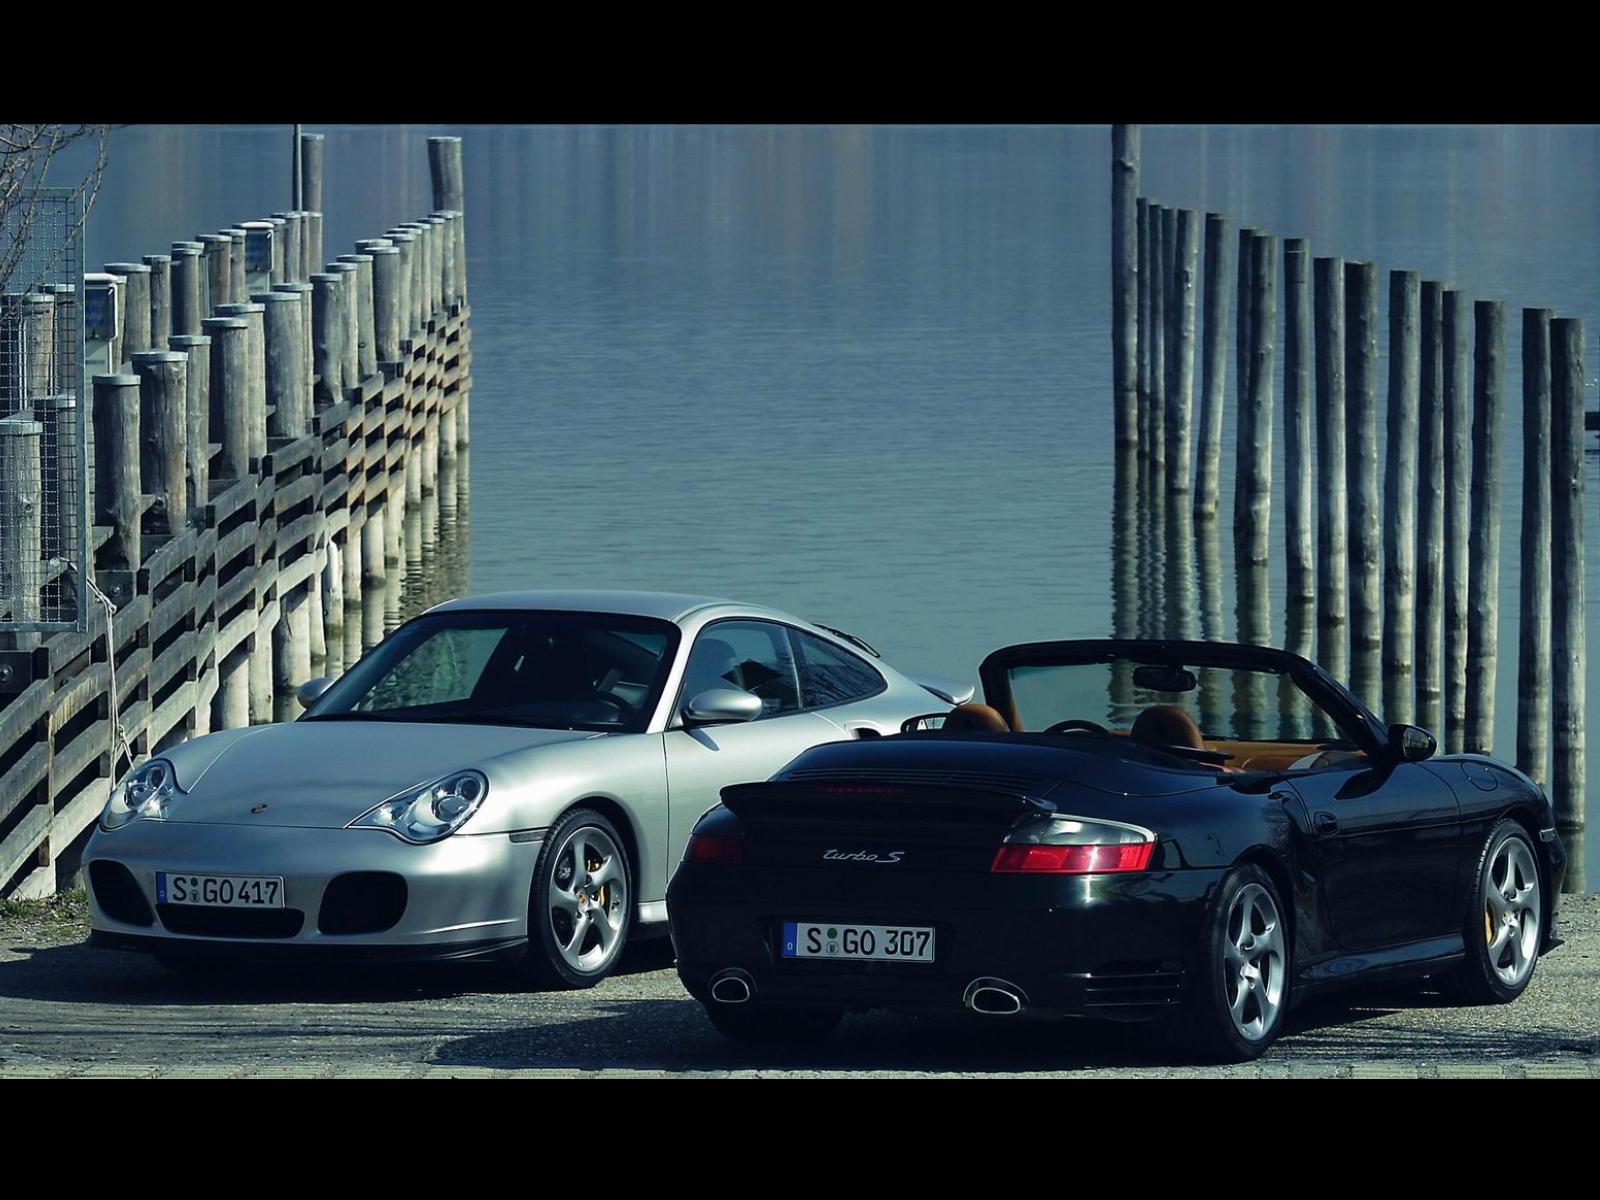 Porsche+996+911+Turbo+S+Cabriolet+Cars+Wallpapers+(1).jpg